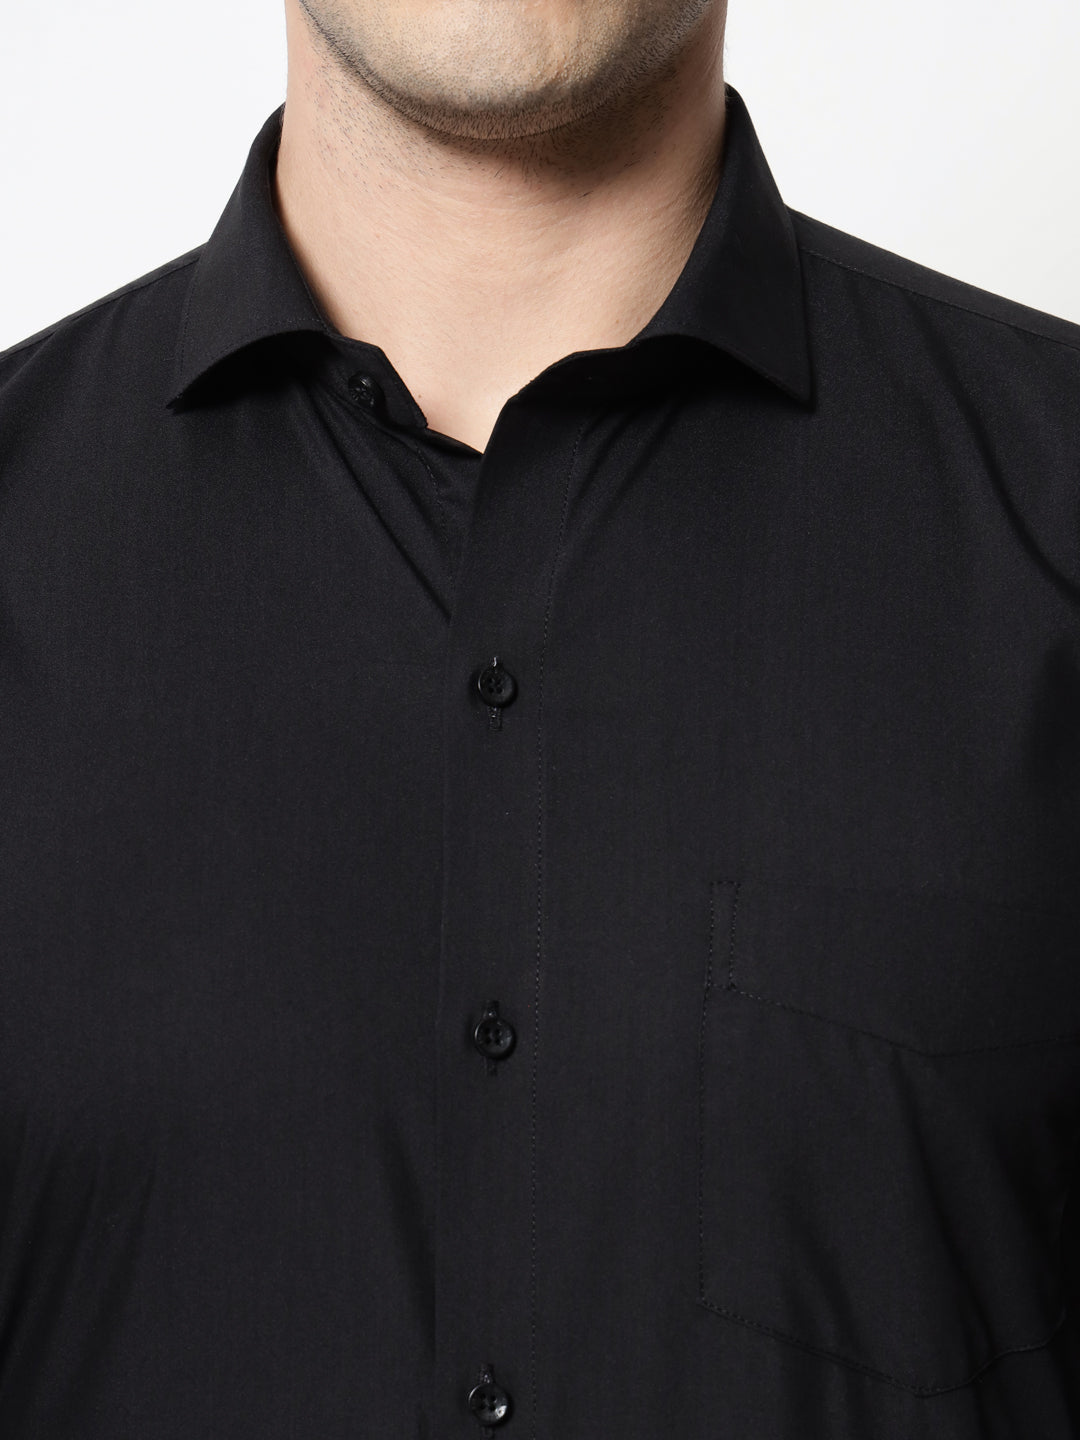 Black and White Shirts Black Plain Solid Shirt